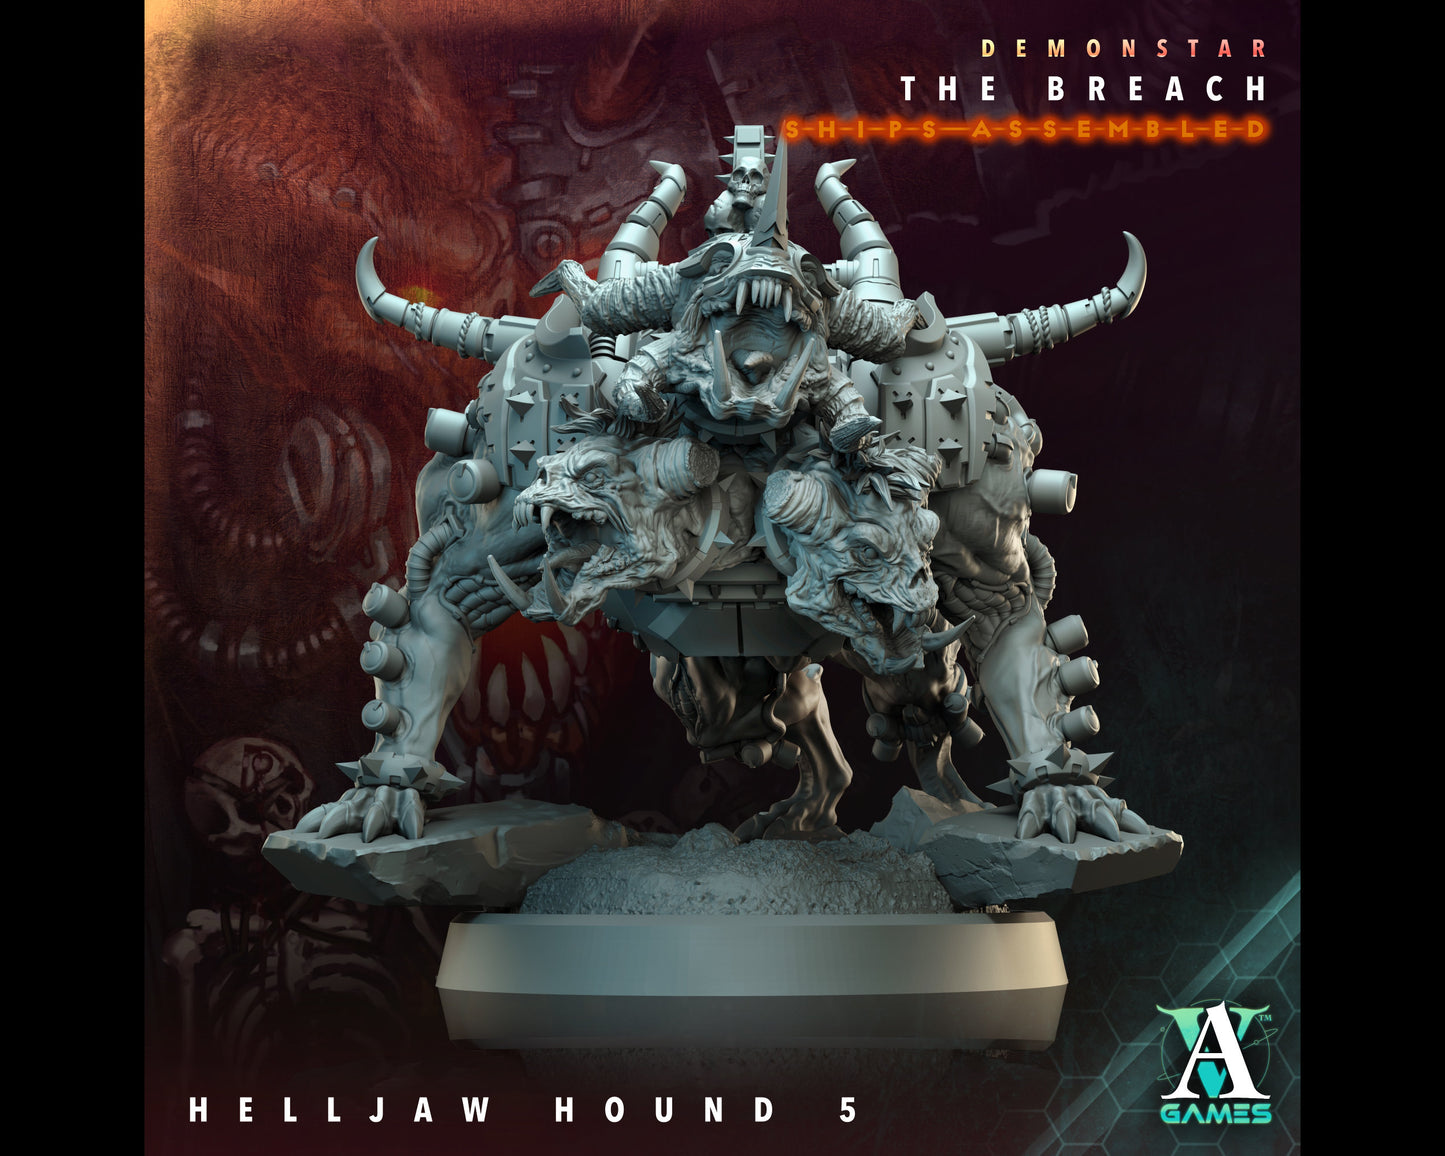 Helljaw Hound 5 - Demonstar: The Breach - Highly Detailed Resin 8k 3D Printed Miniature